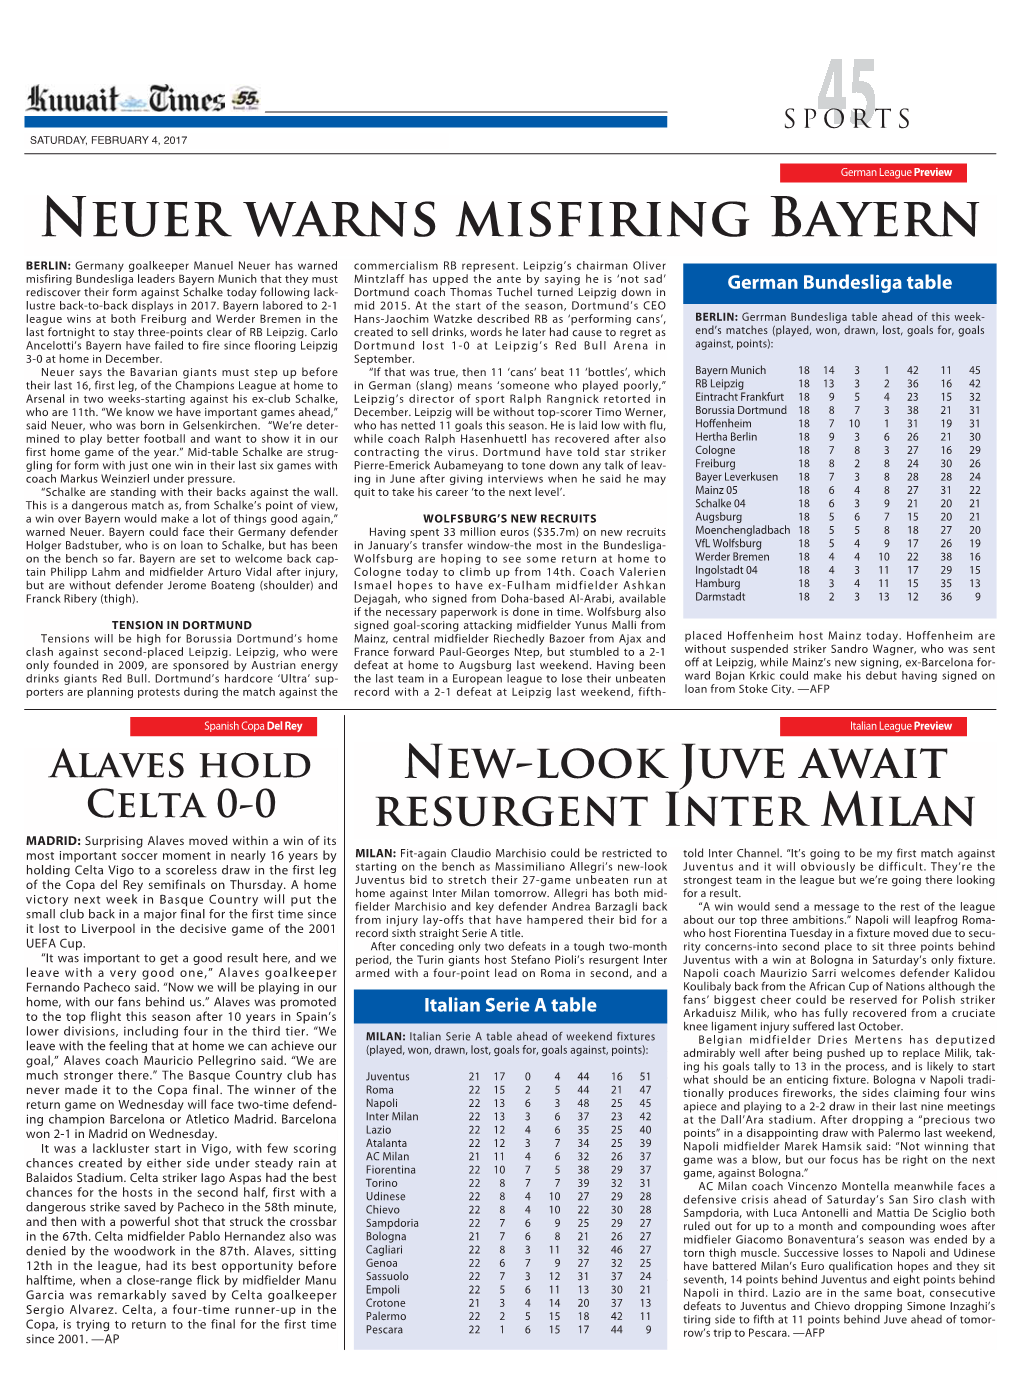 Neuer Warns Misfiring Bayern